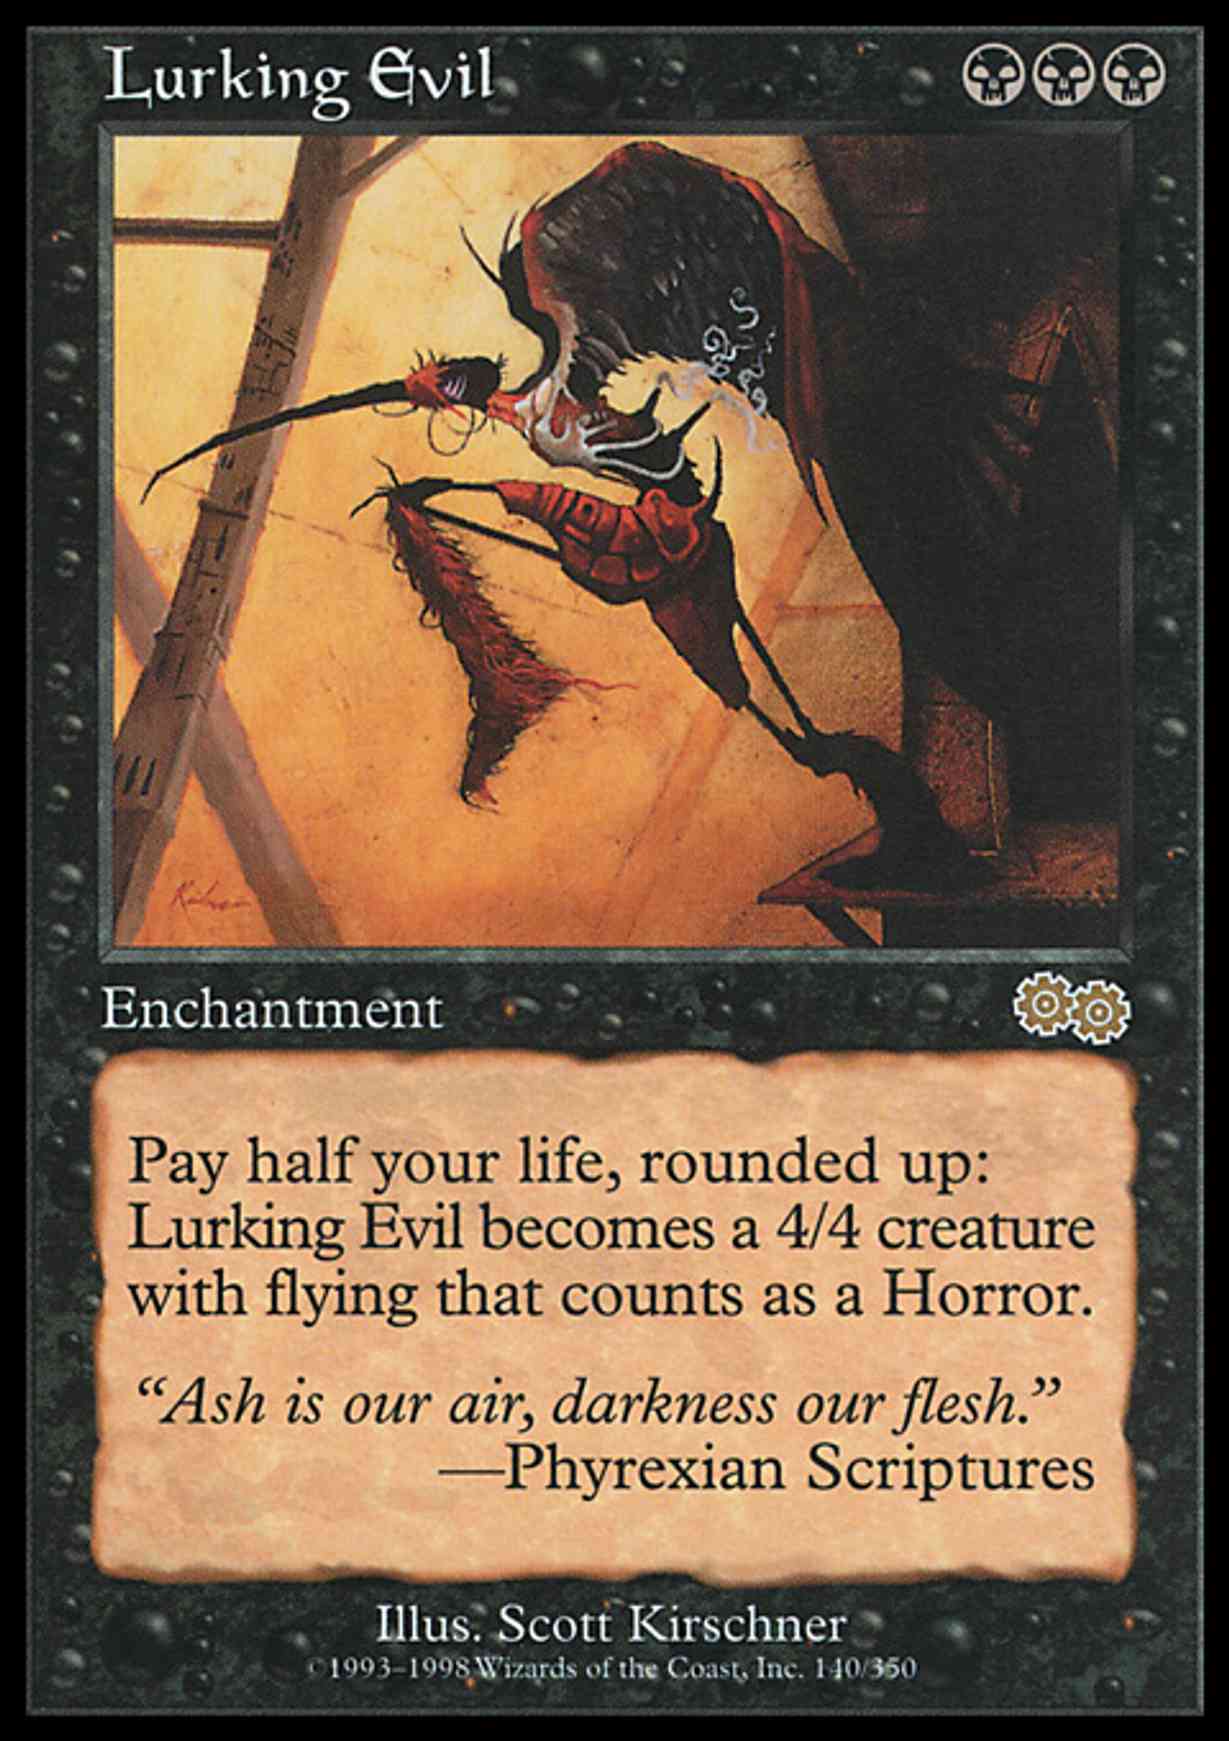 Lurking Evil magic card front